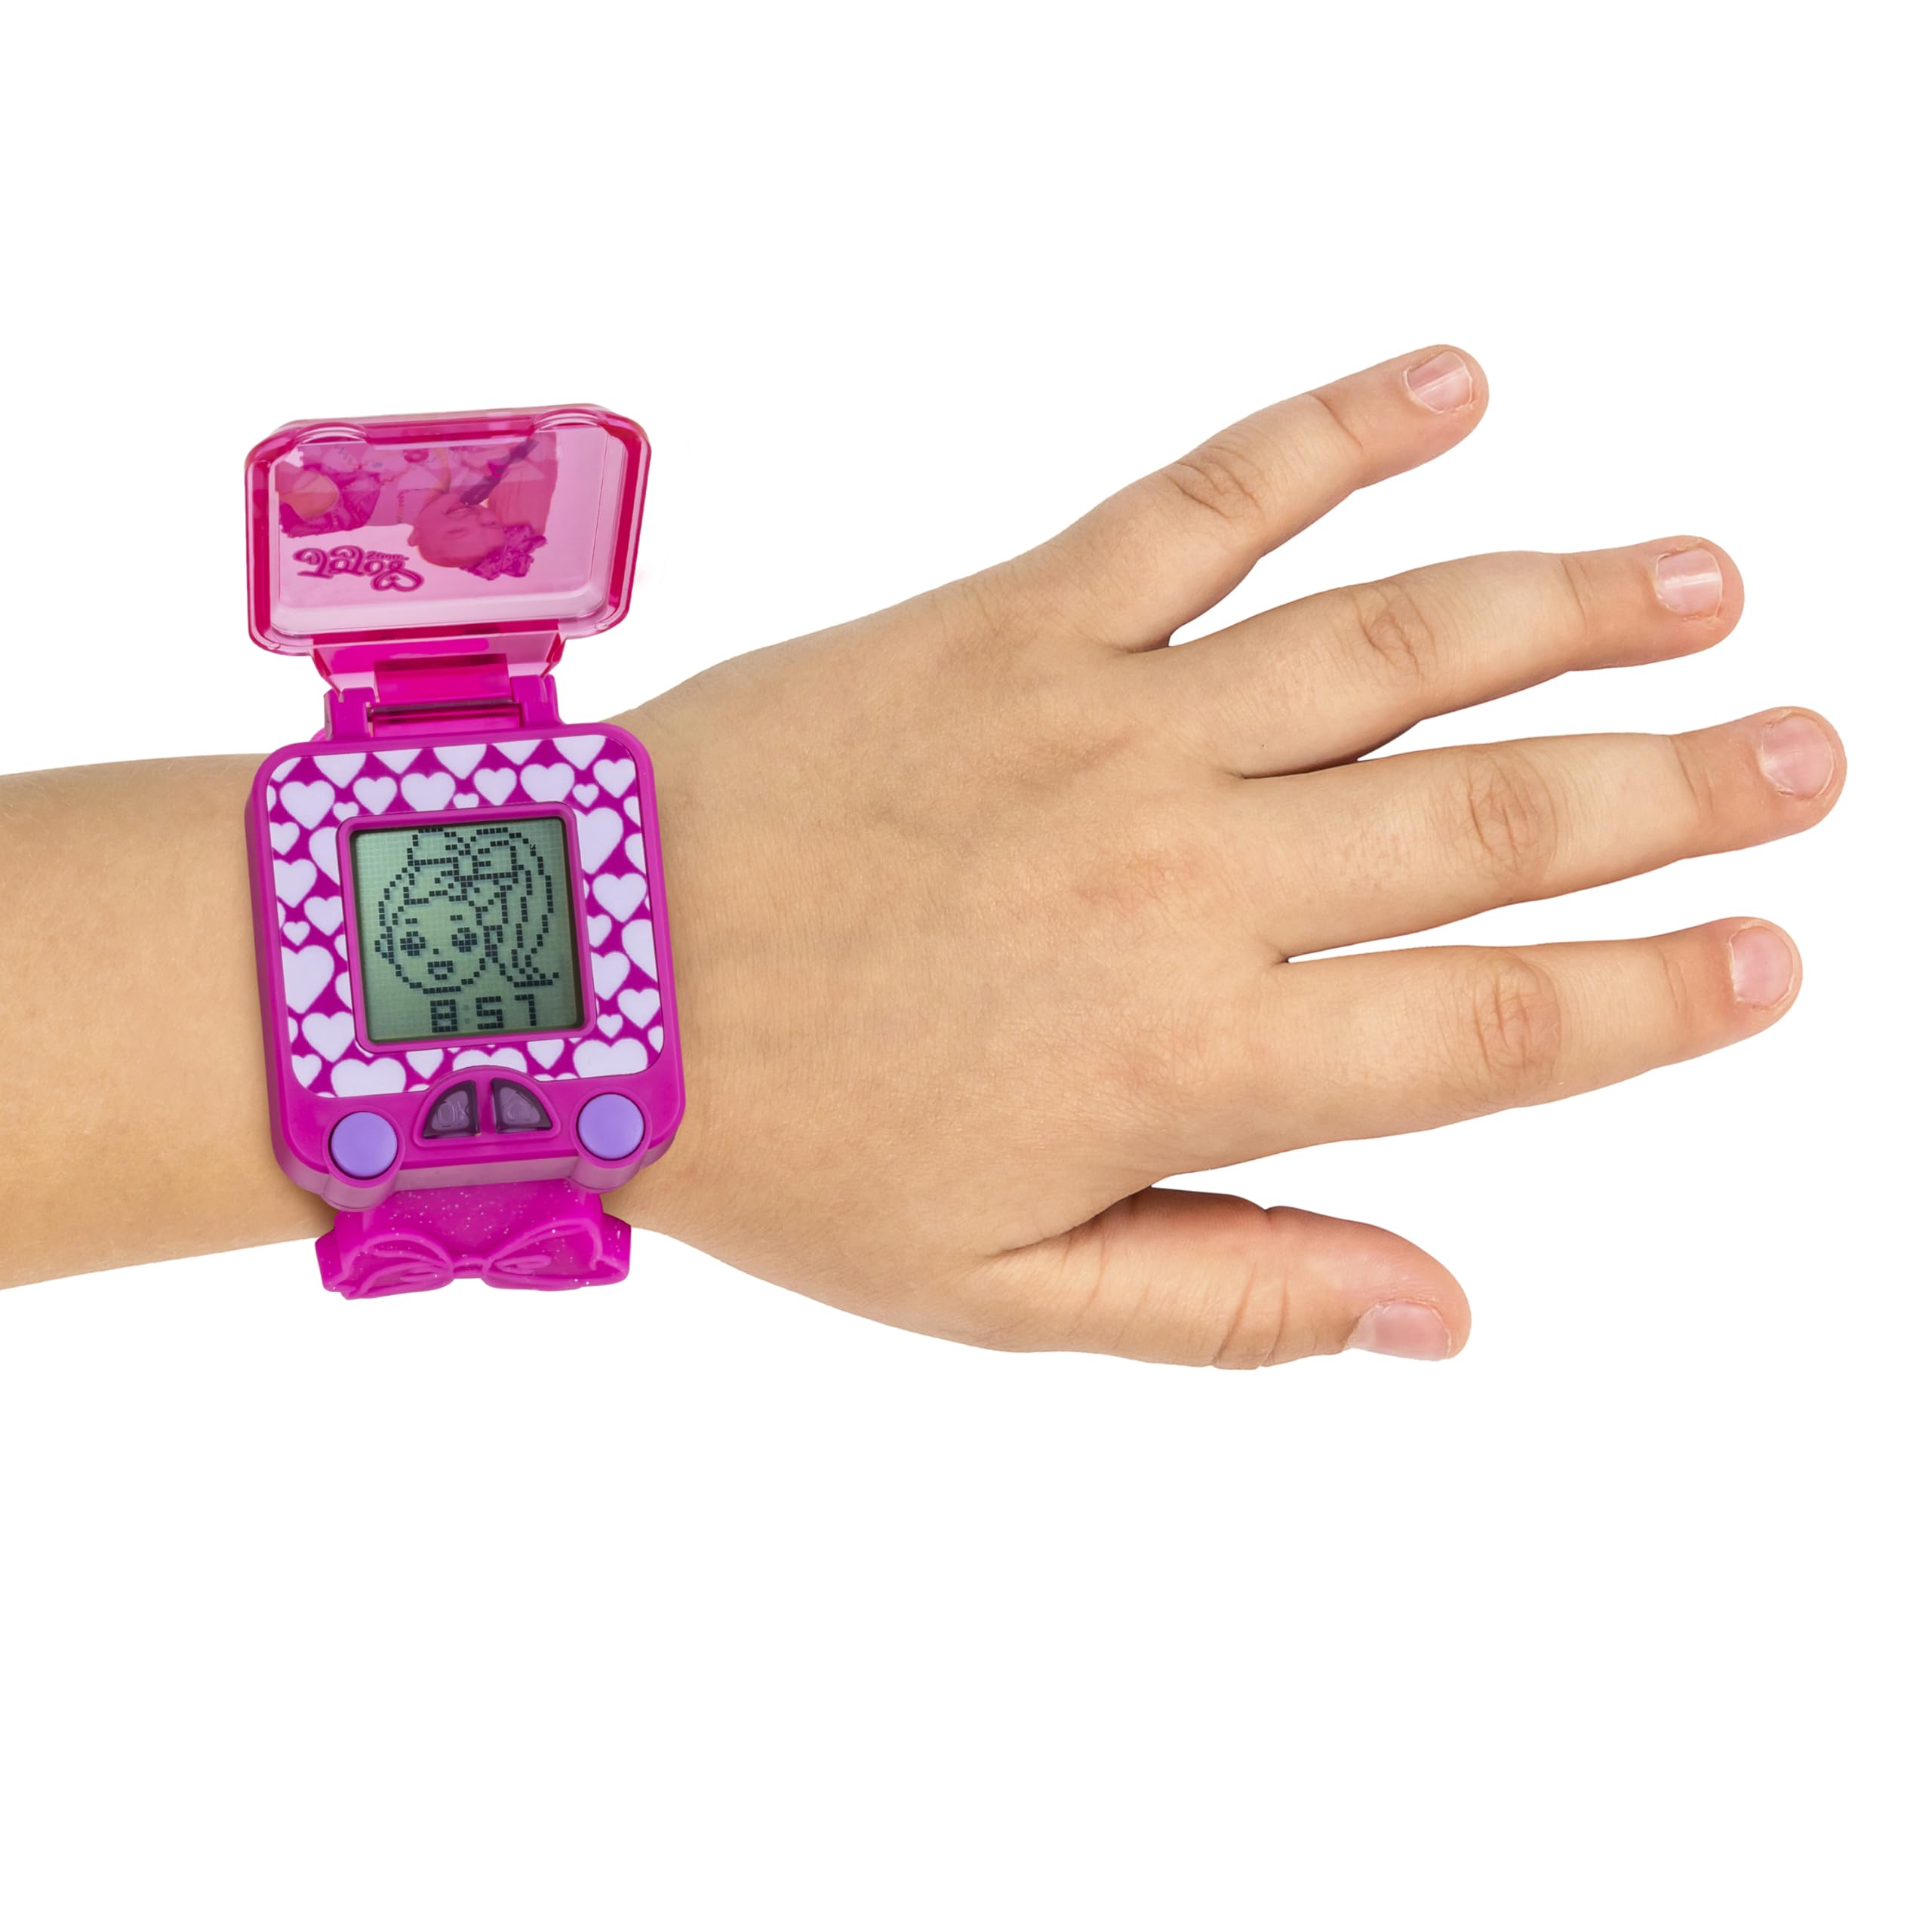 Accutime Nickelodeon JoJo Siwa Educational Learning Digital Pink Watch for Toddler Girls, Boys, Kids with Light Up Display (Model: JOJ4390AZ)